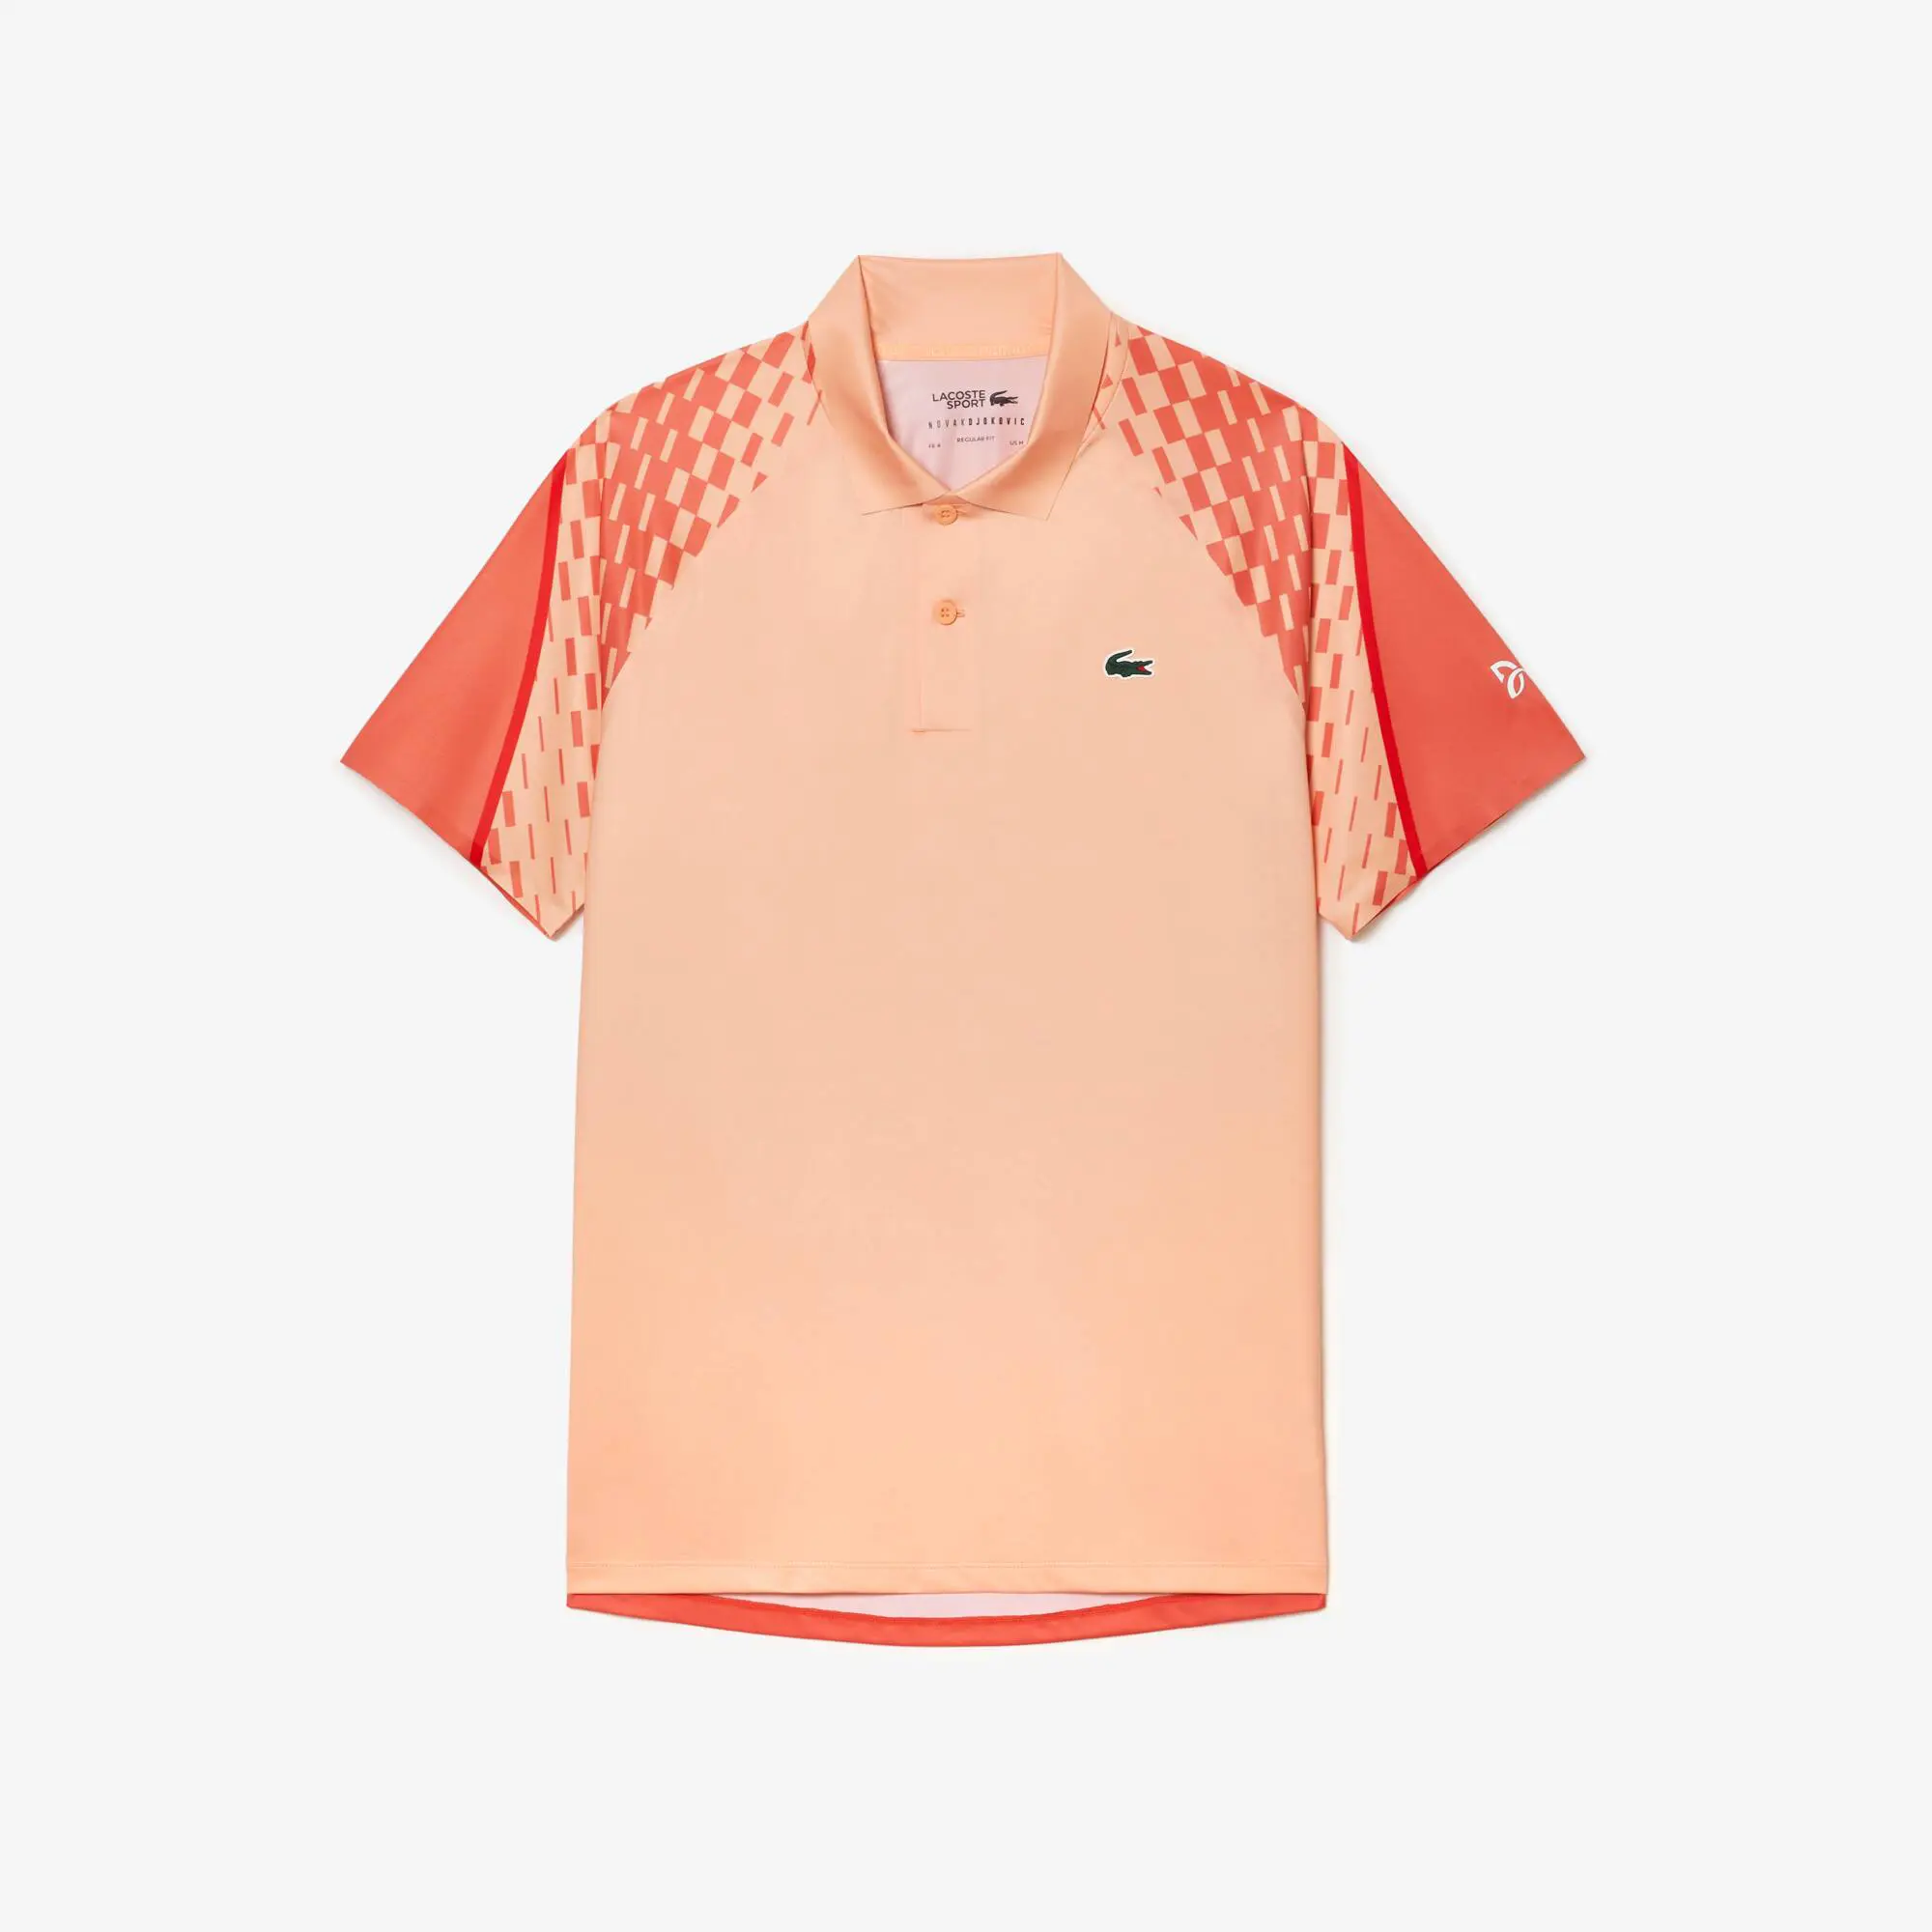 Lacoste Men’s Lacoste Tennis x Novak Djokovic Tricolour Polo Shirt. 2